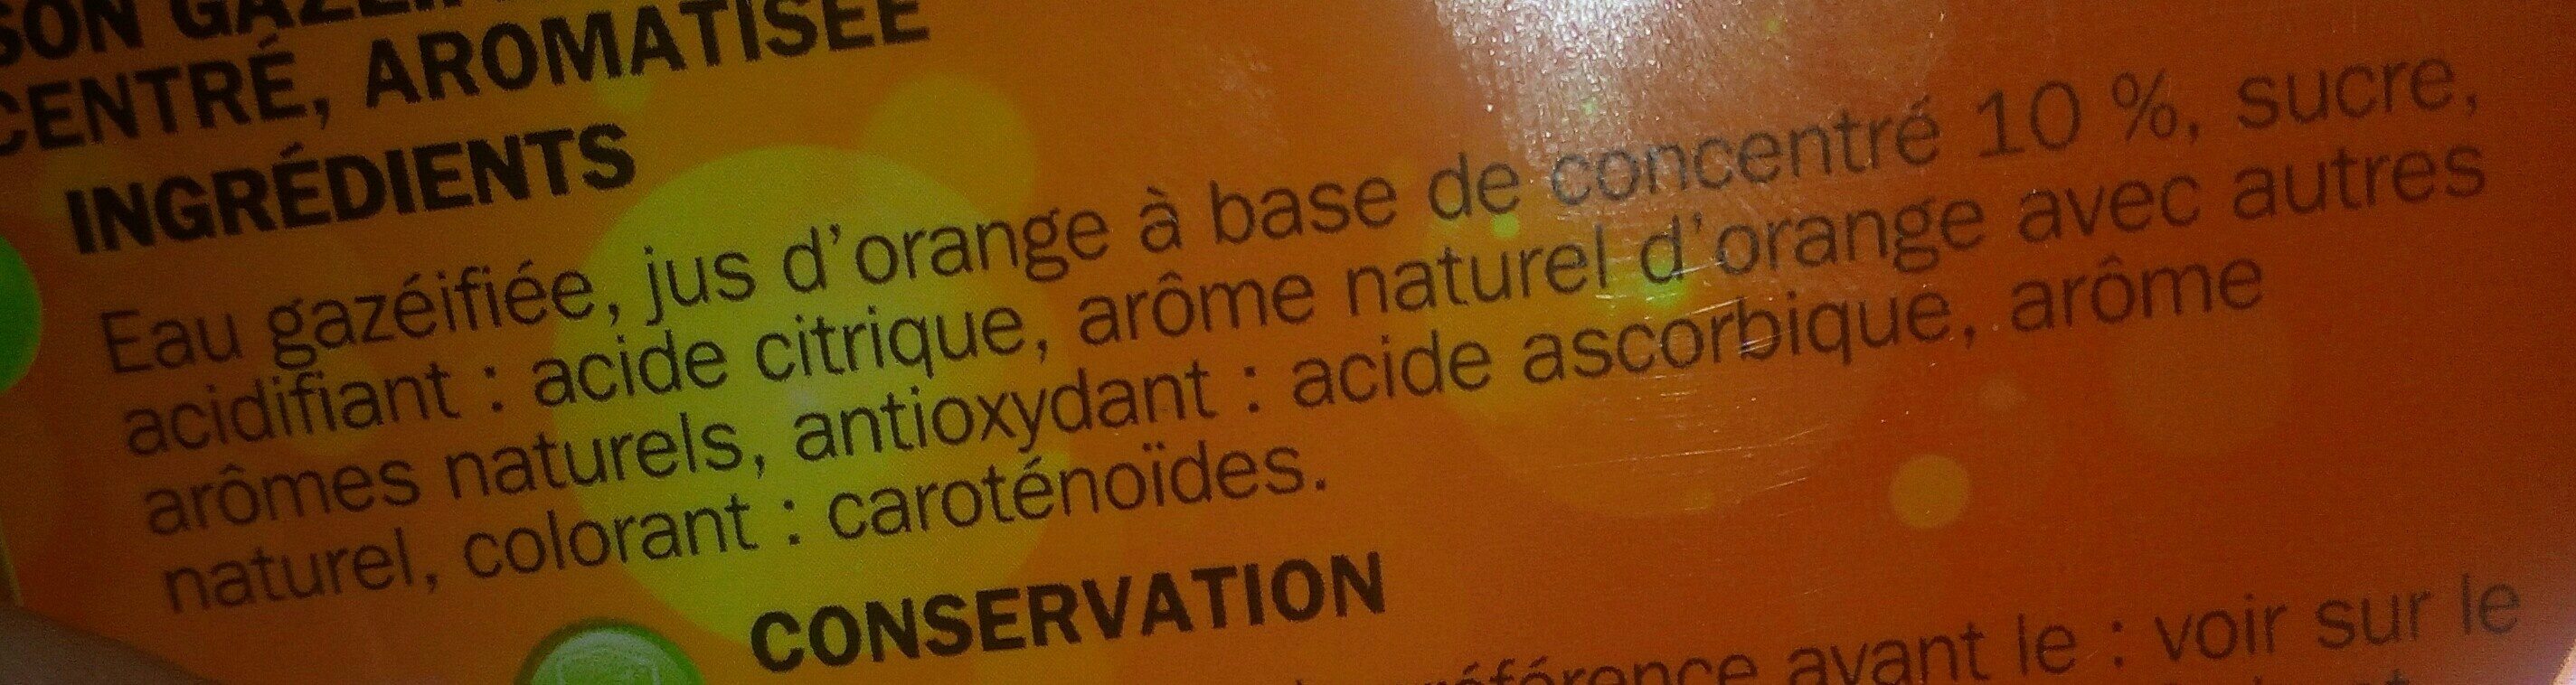 Jus d'orange gazeuse - Ingredients - fr